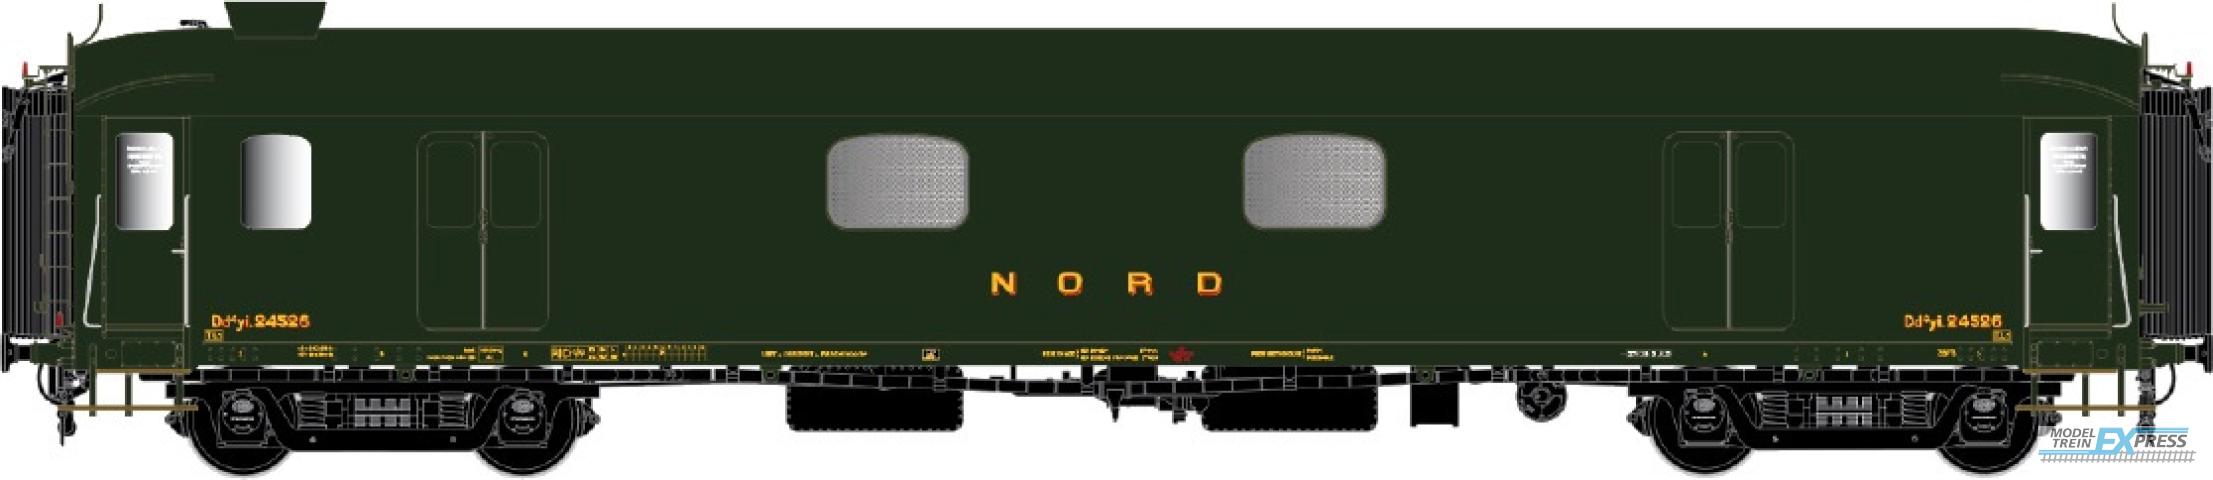 LS Models 31204 Dd4yi 24548, Cie du Nord, kopladders / 1929 / NORD / HO / DC / 1 P.